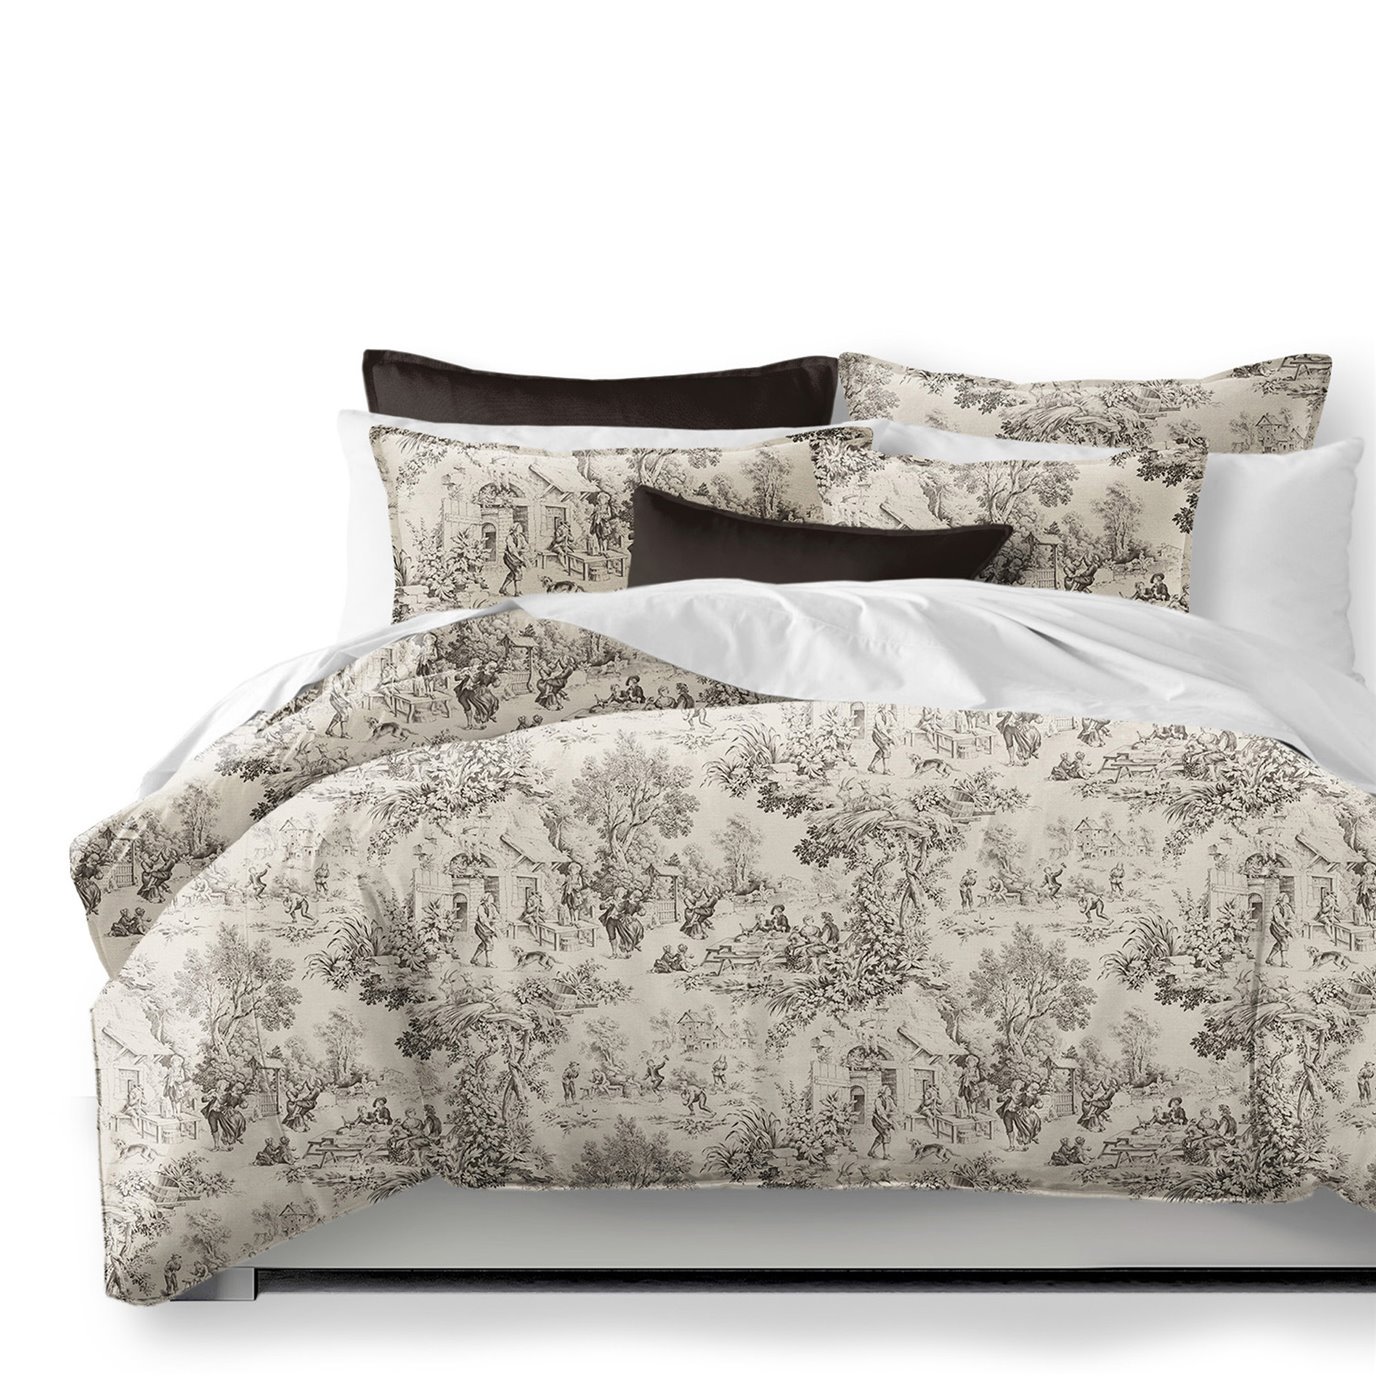 Maison Toile Sepia Comforter and Pillow Sham(s) Set - Size King / California King